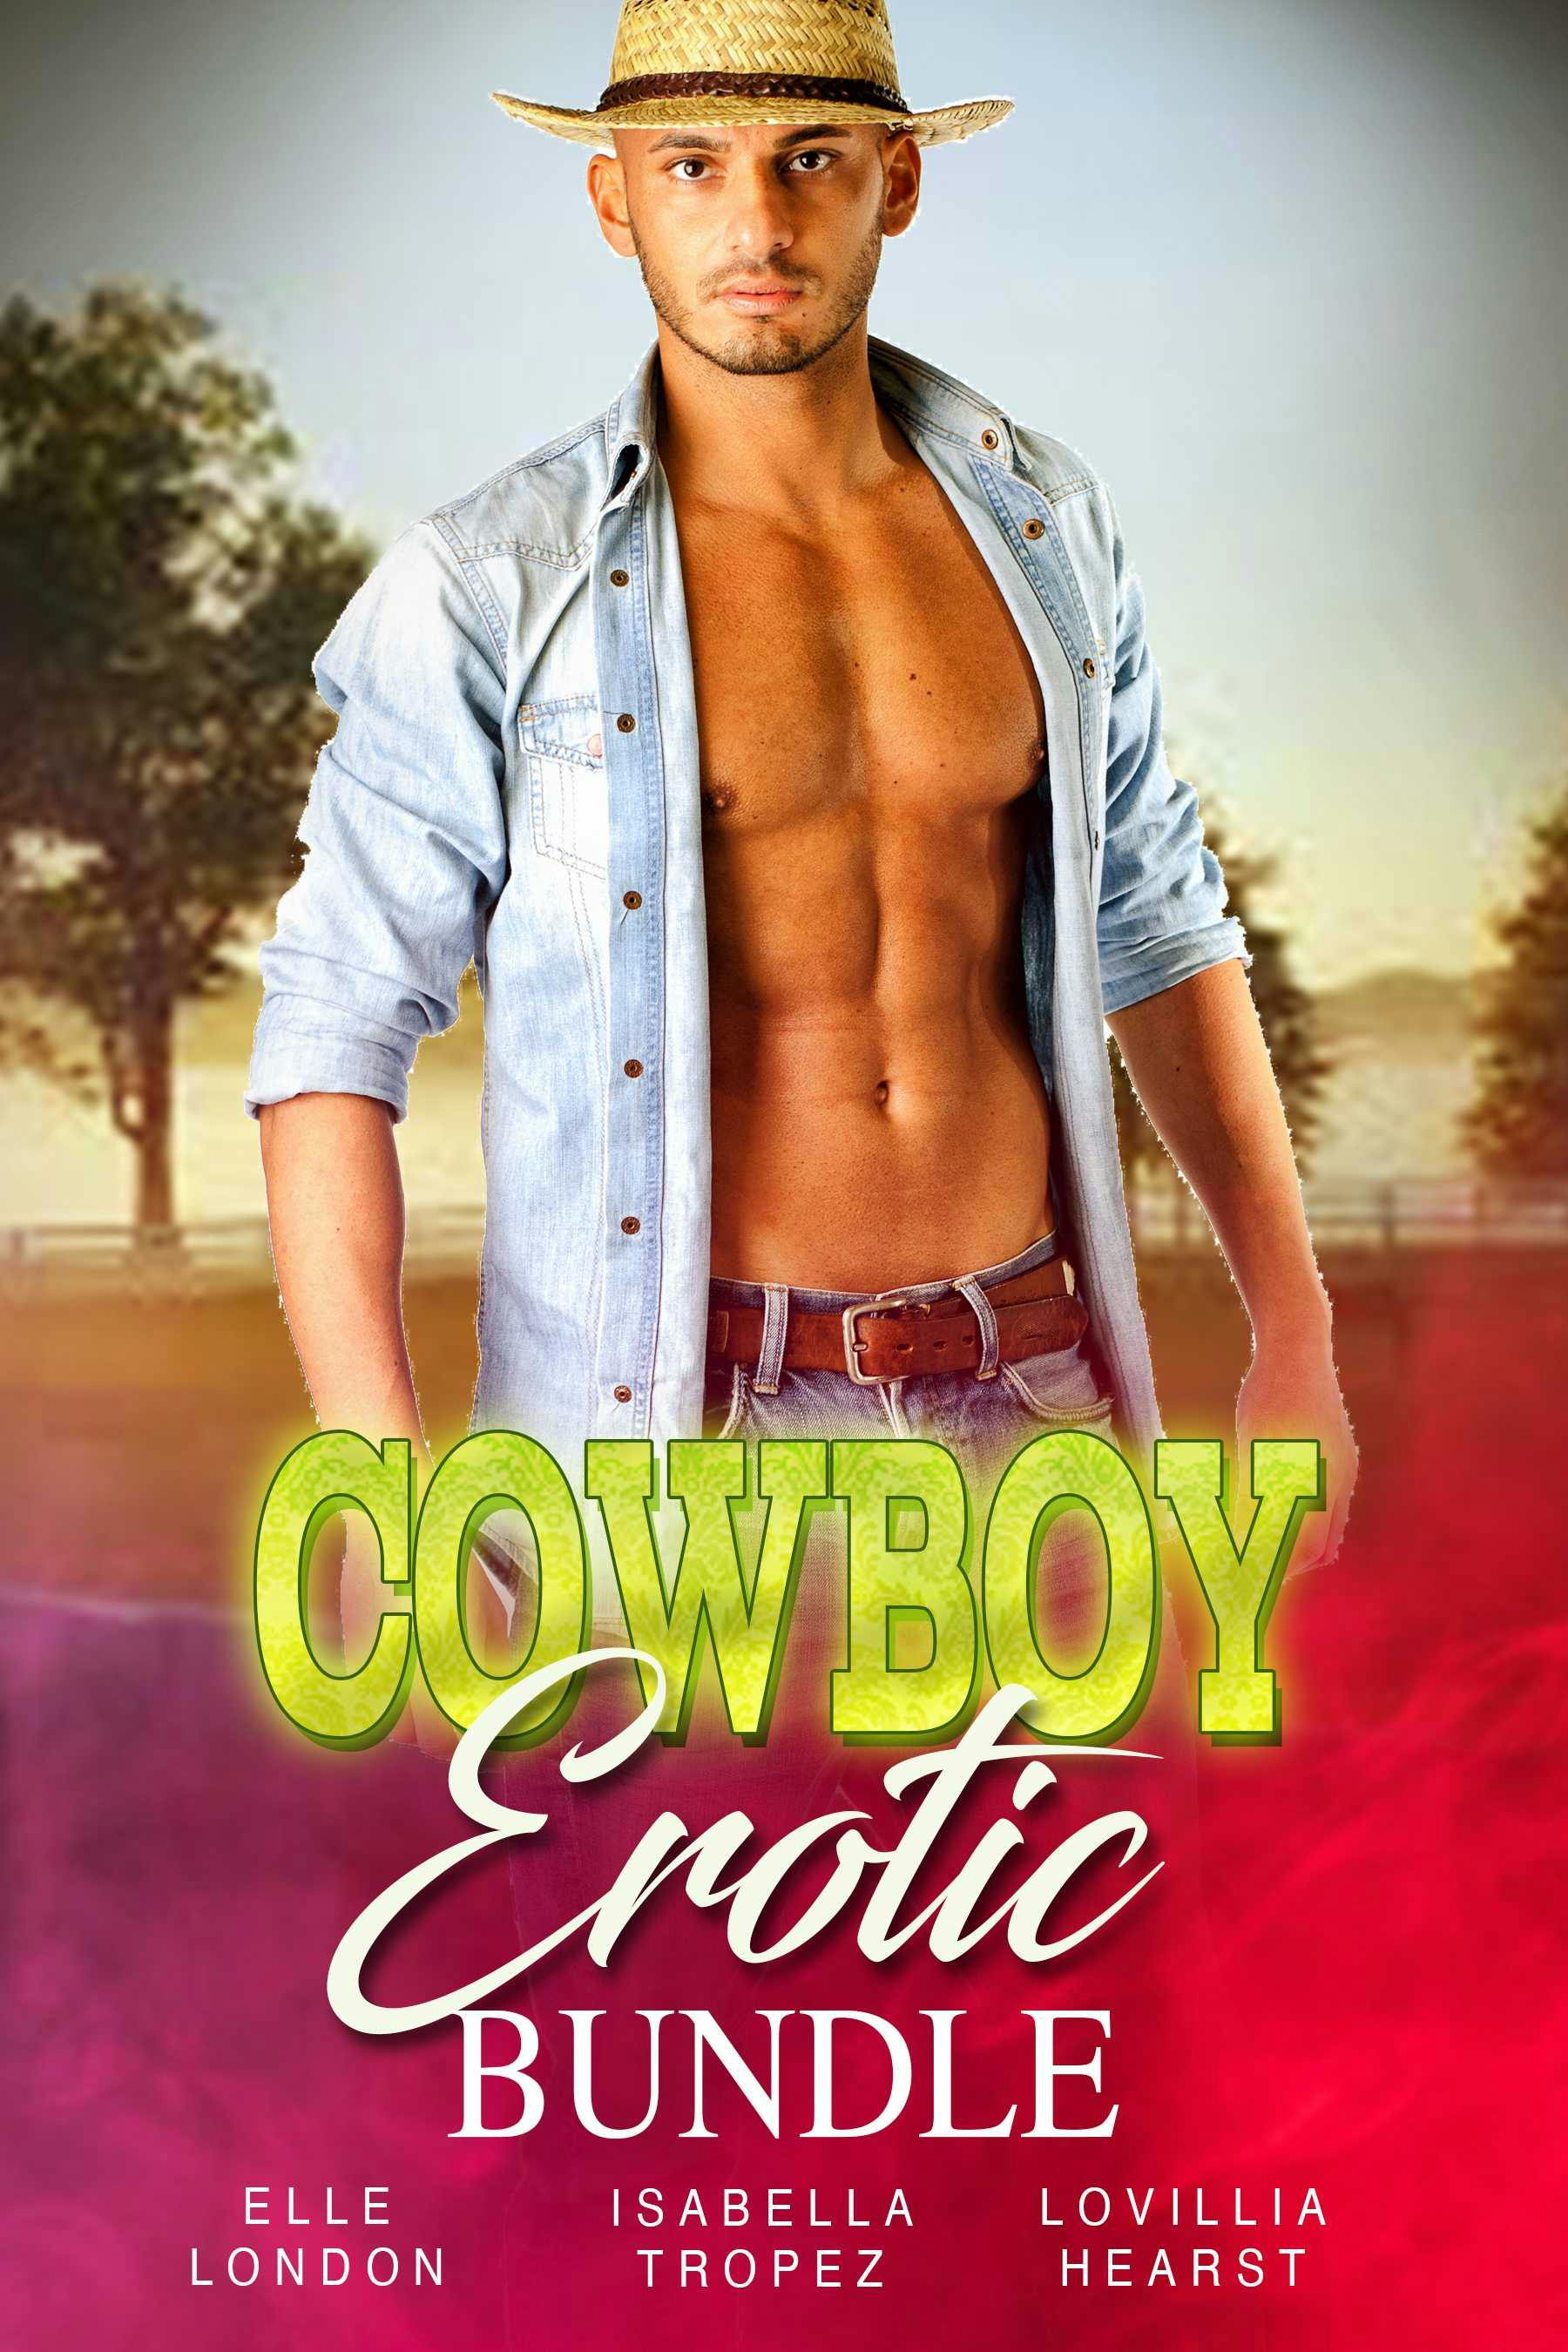 Cowboy Erotic Bundle - undefined